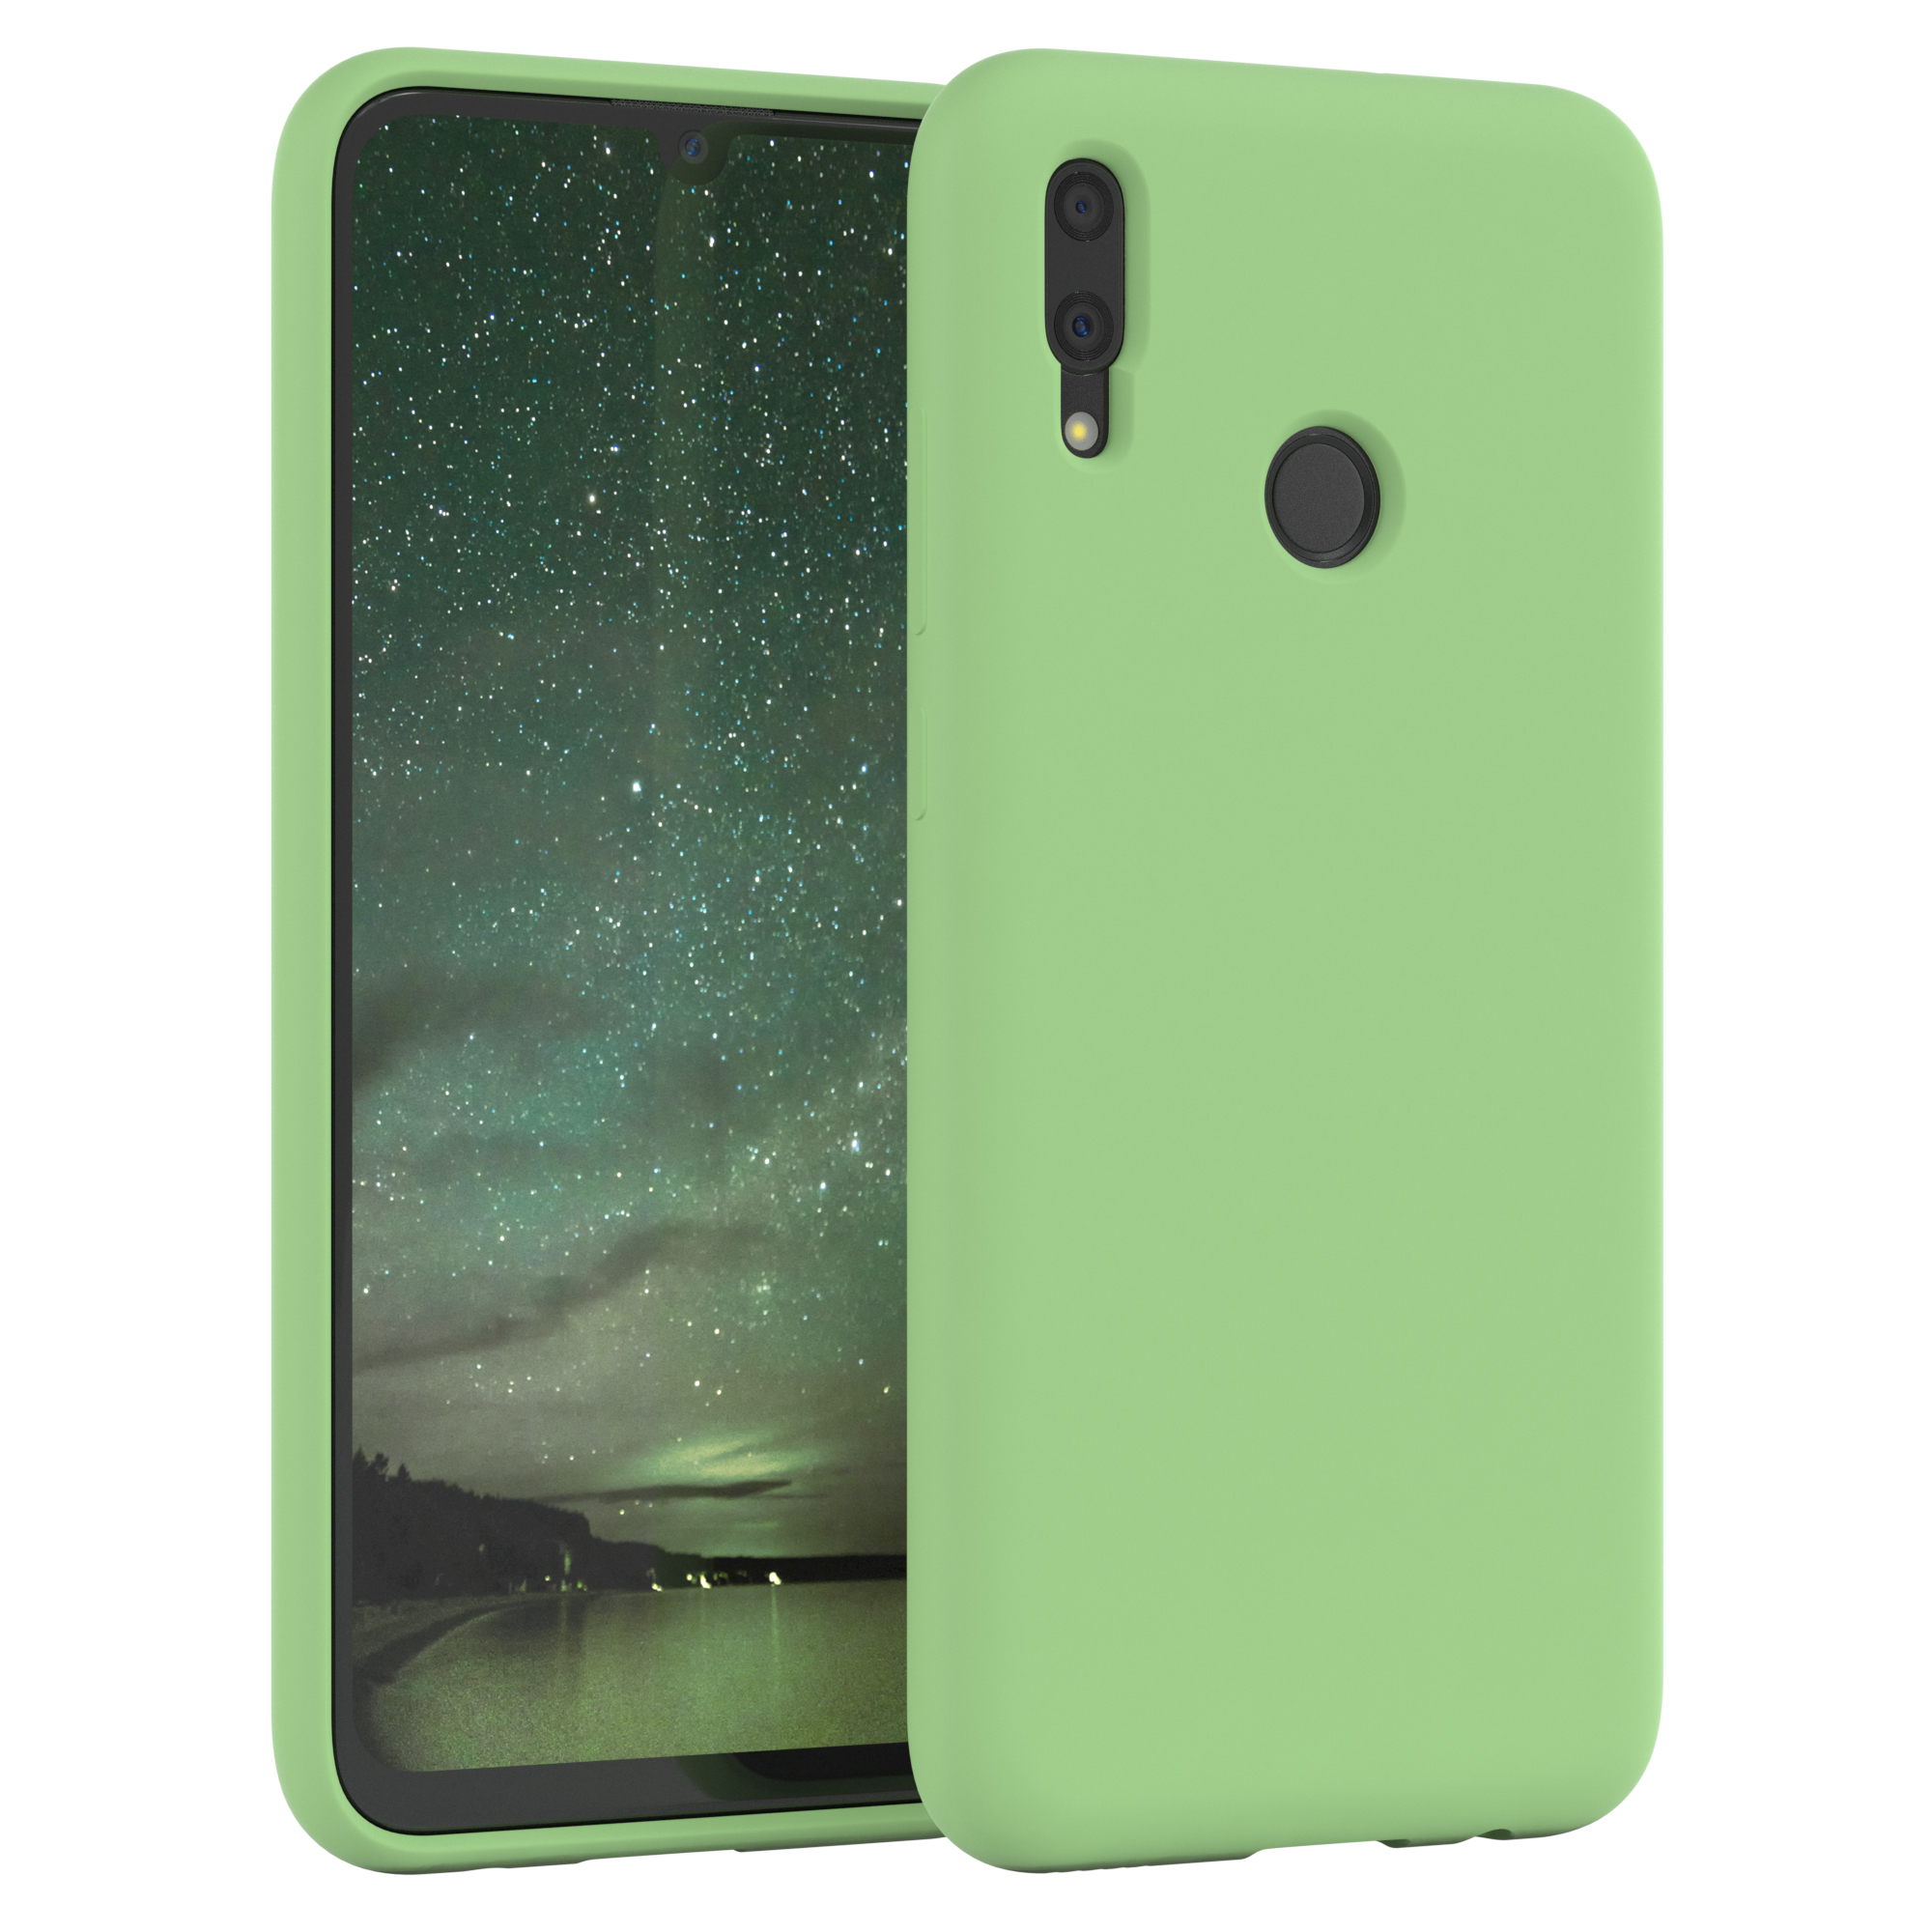 EAZY CASE Backcover, Grün (2019), Huawei, P Silikon Premium Handycase, Smart